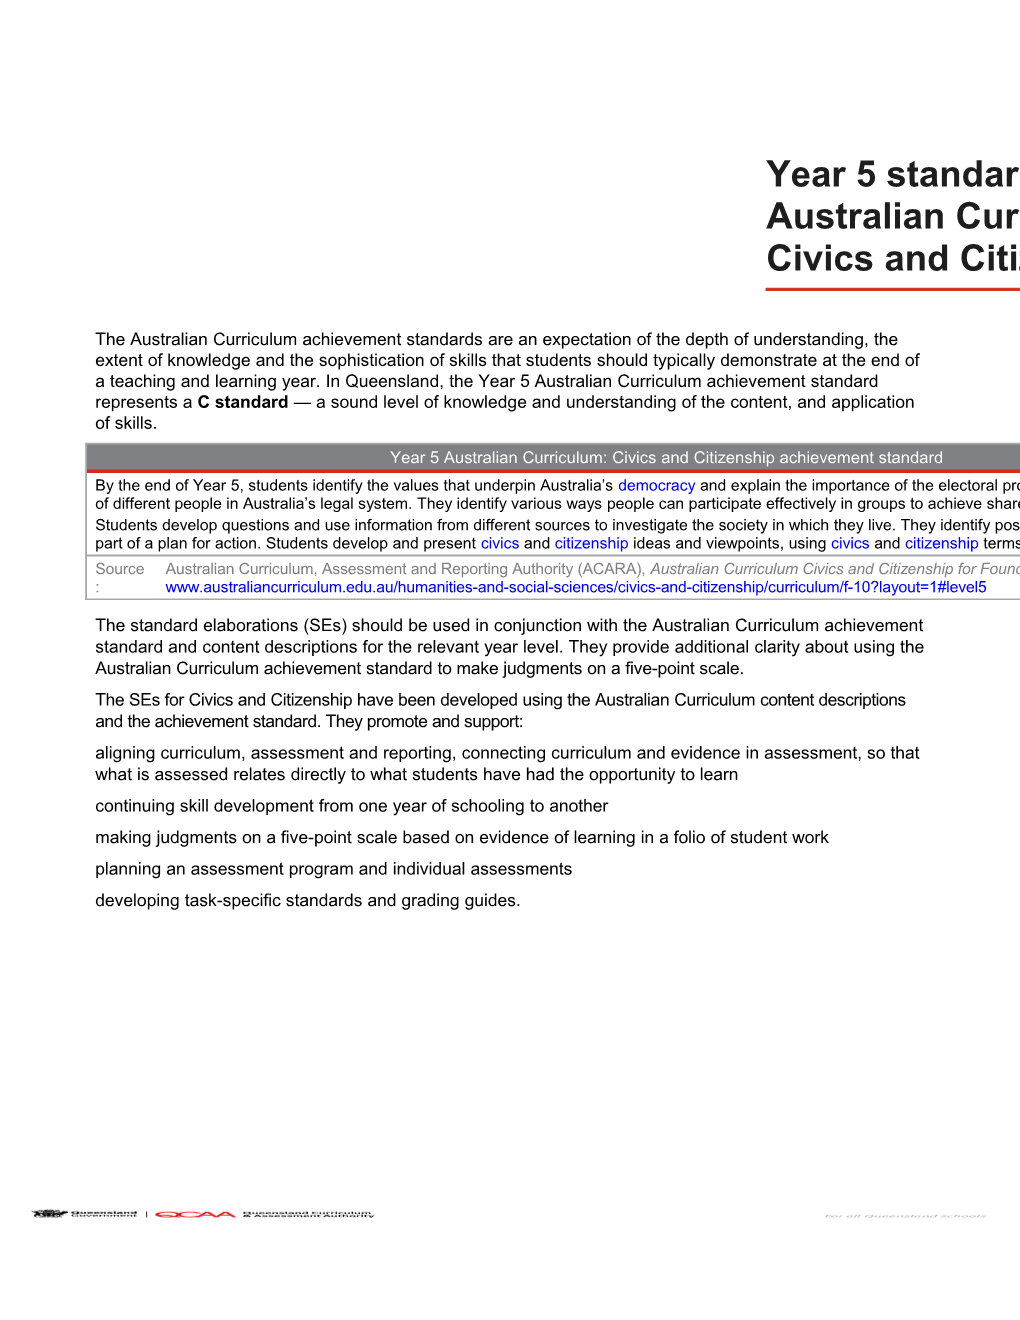 Year 5 Standard Elaborations Australian Curriculum: Civics and Citizenship